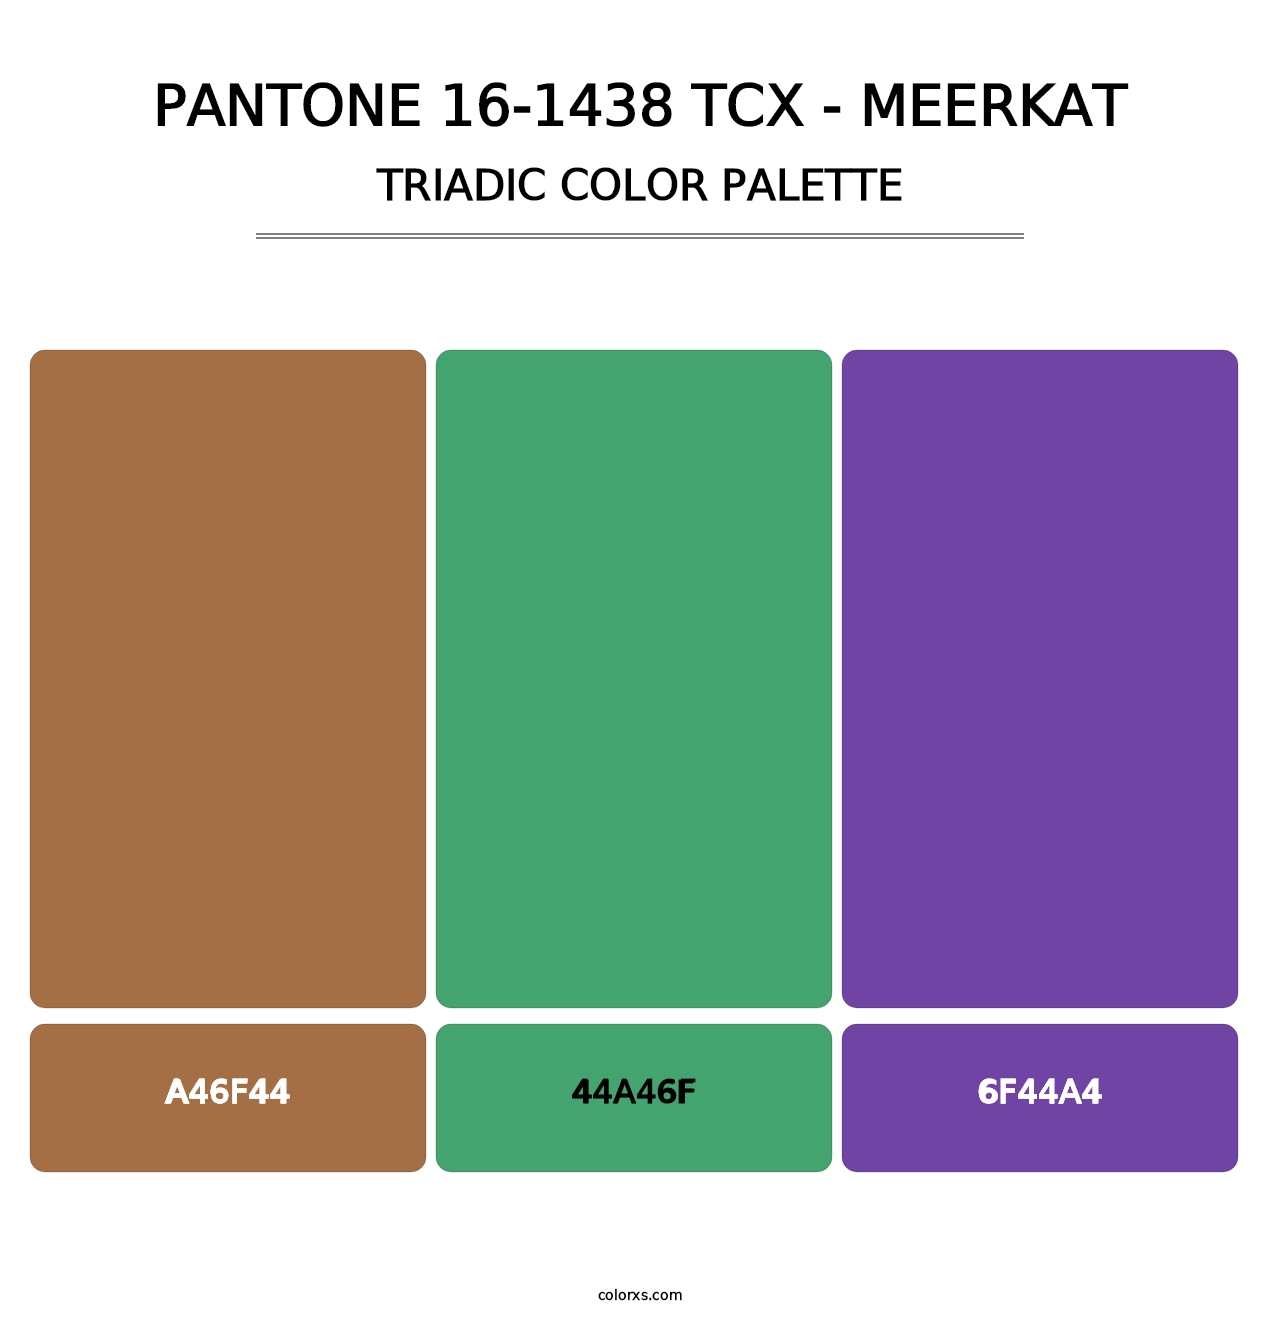 PANTONE 16-1438 TCX - Meerkat - Triadic Color Palette